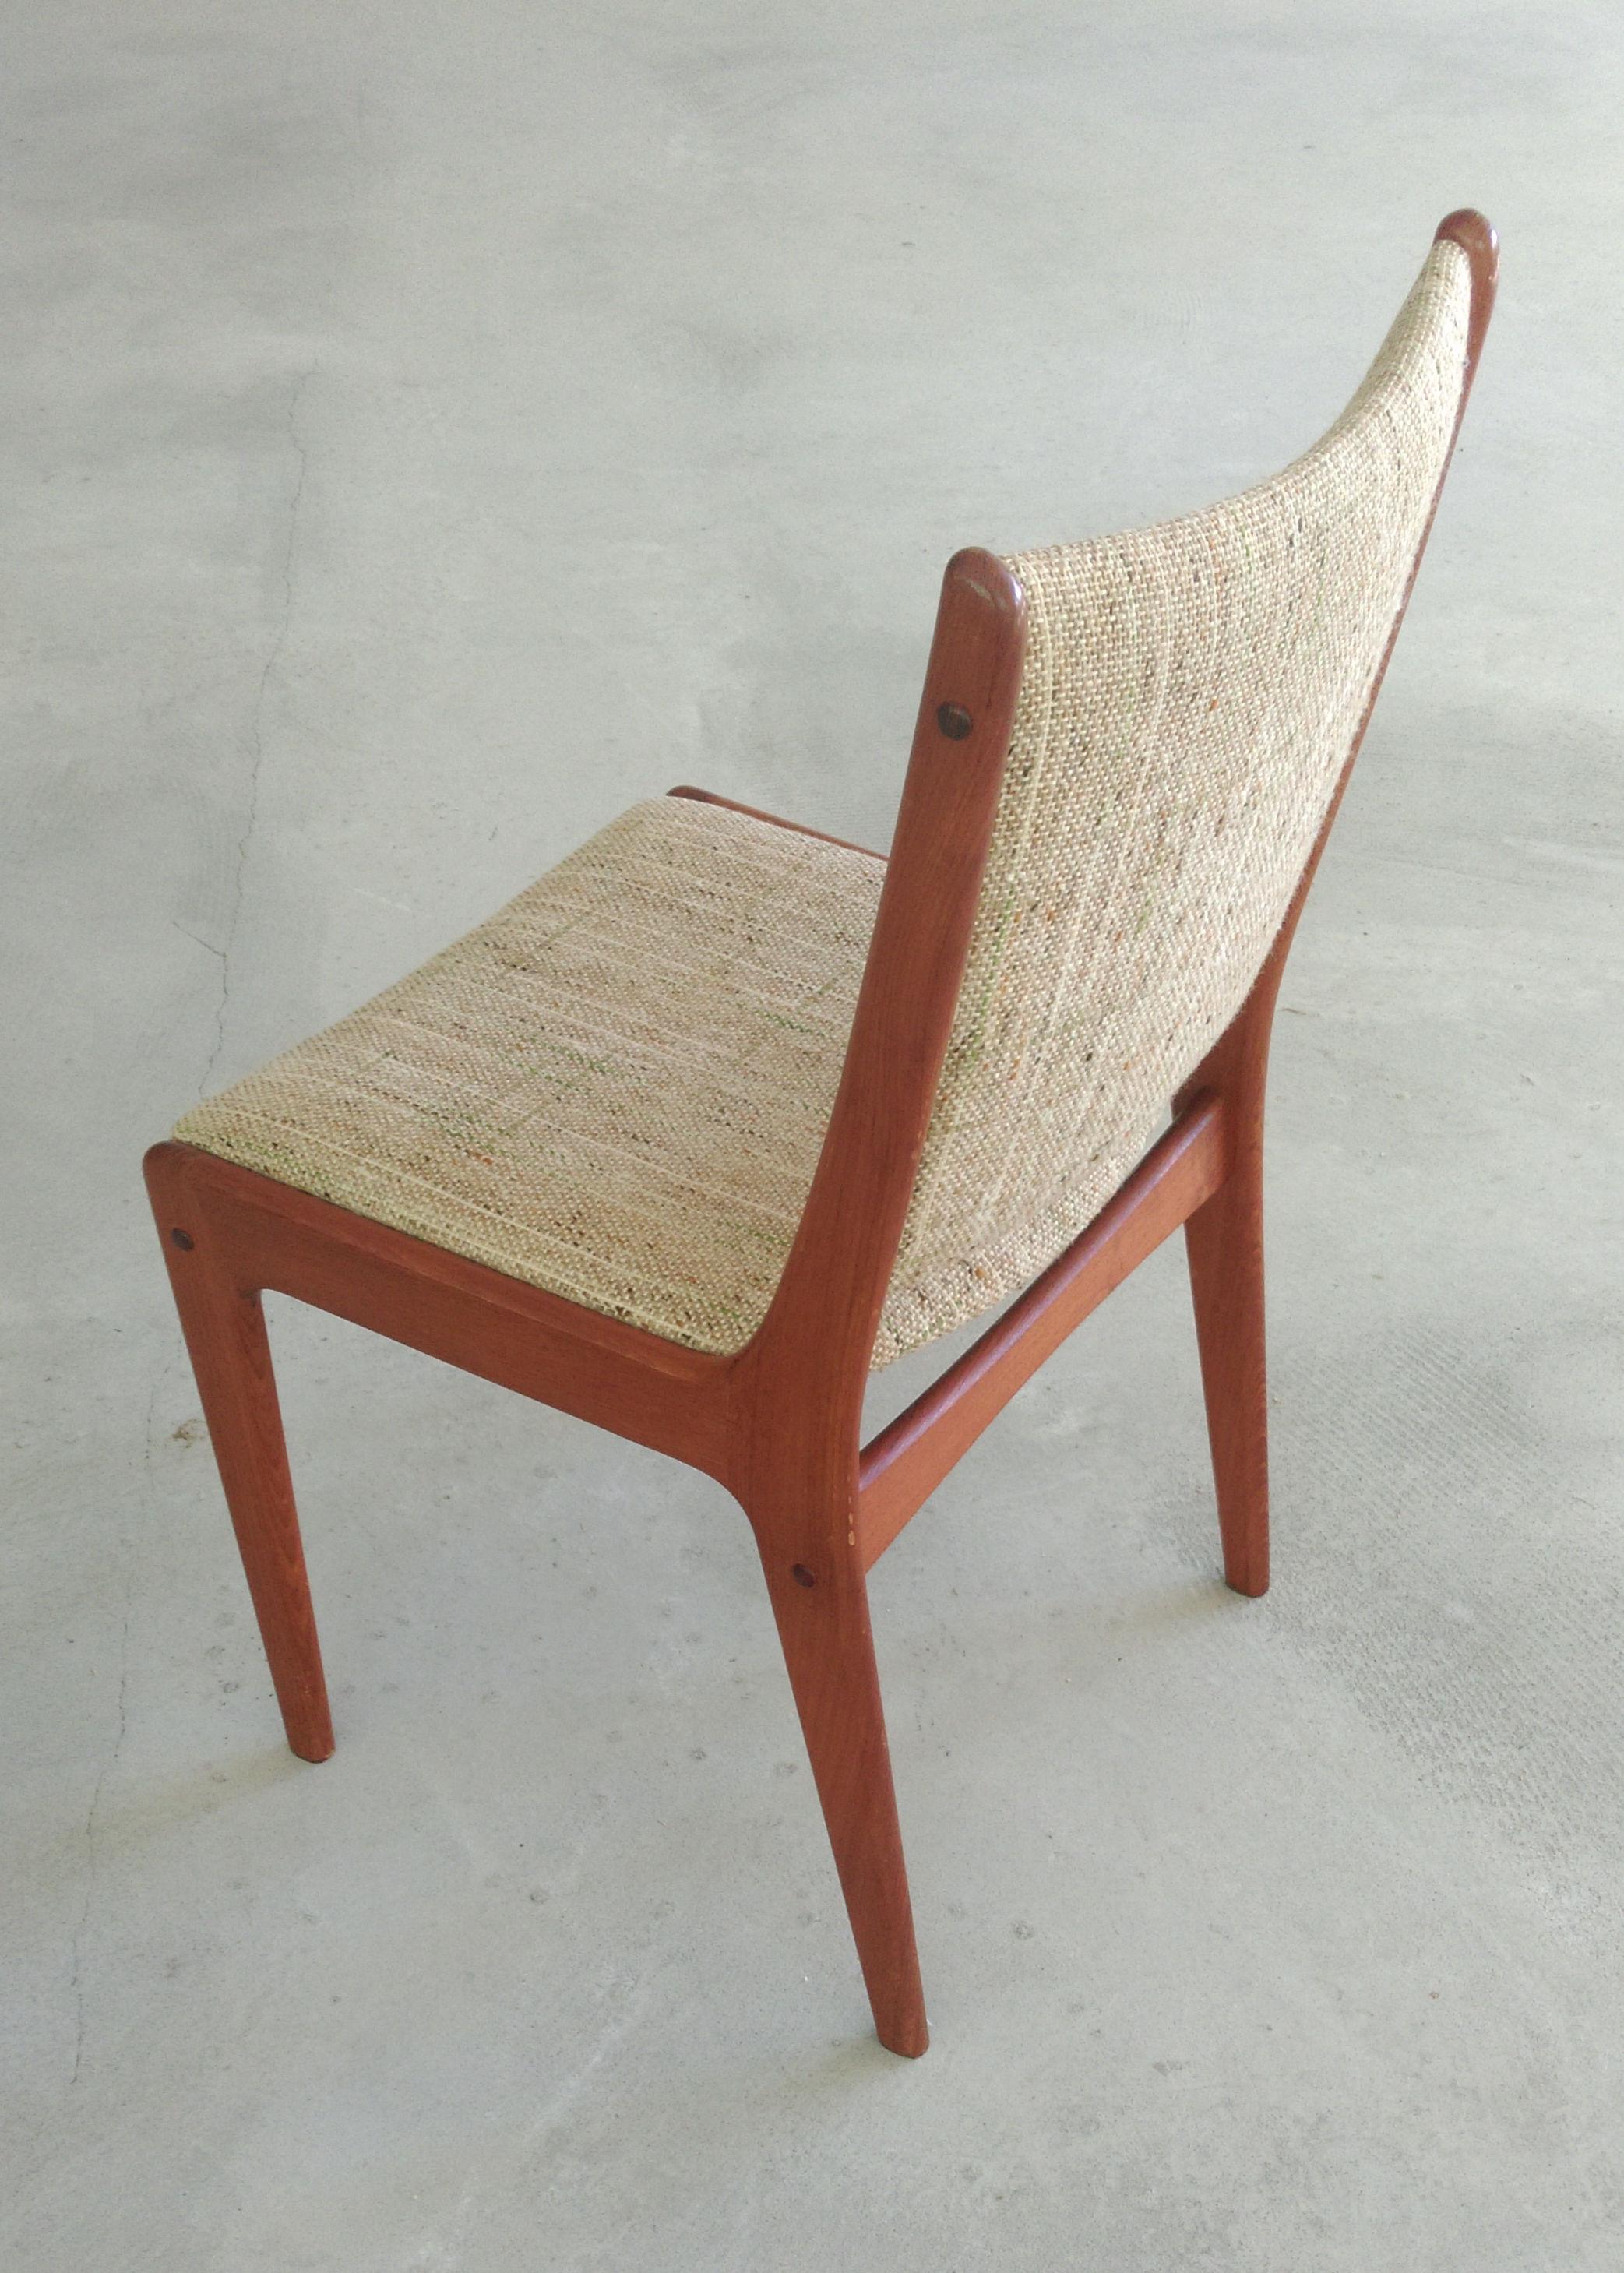 Twelve Restored Johannes Andersen Teak Dining Chairs Custom Upholstery Included In Good Condition For Sale In Knebel, DK